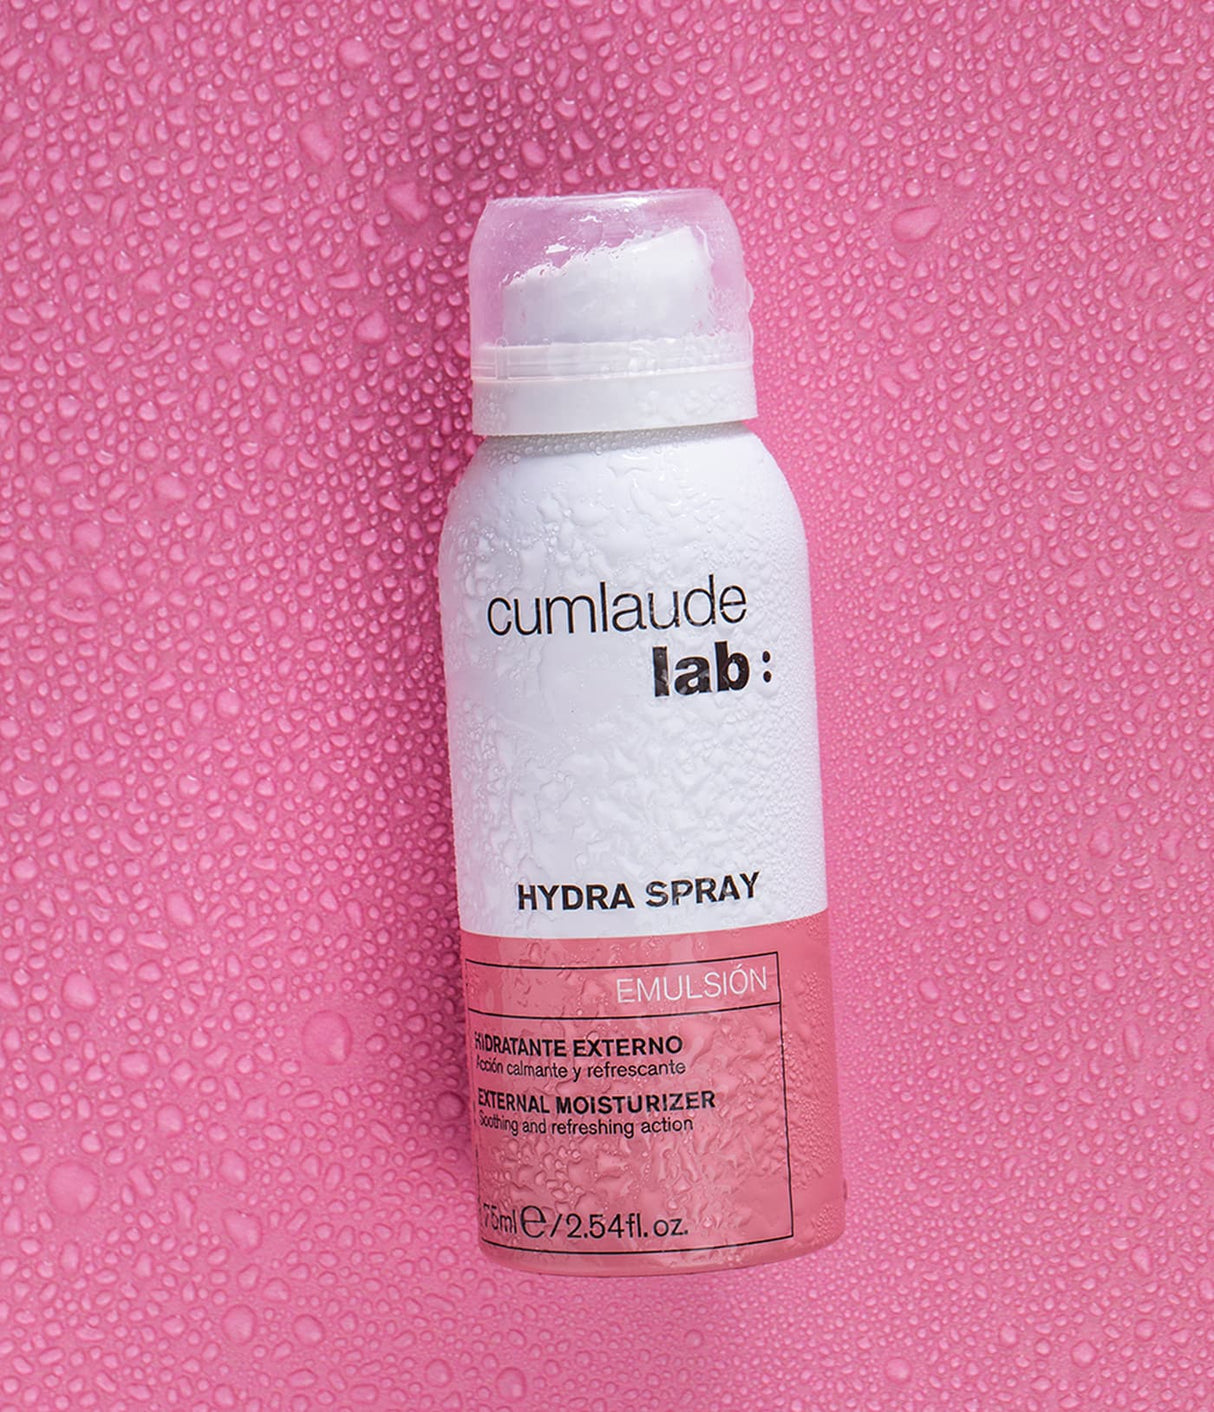 Hydra Spray Vulvar de Cumlaude Lab